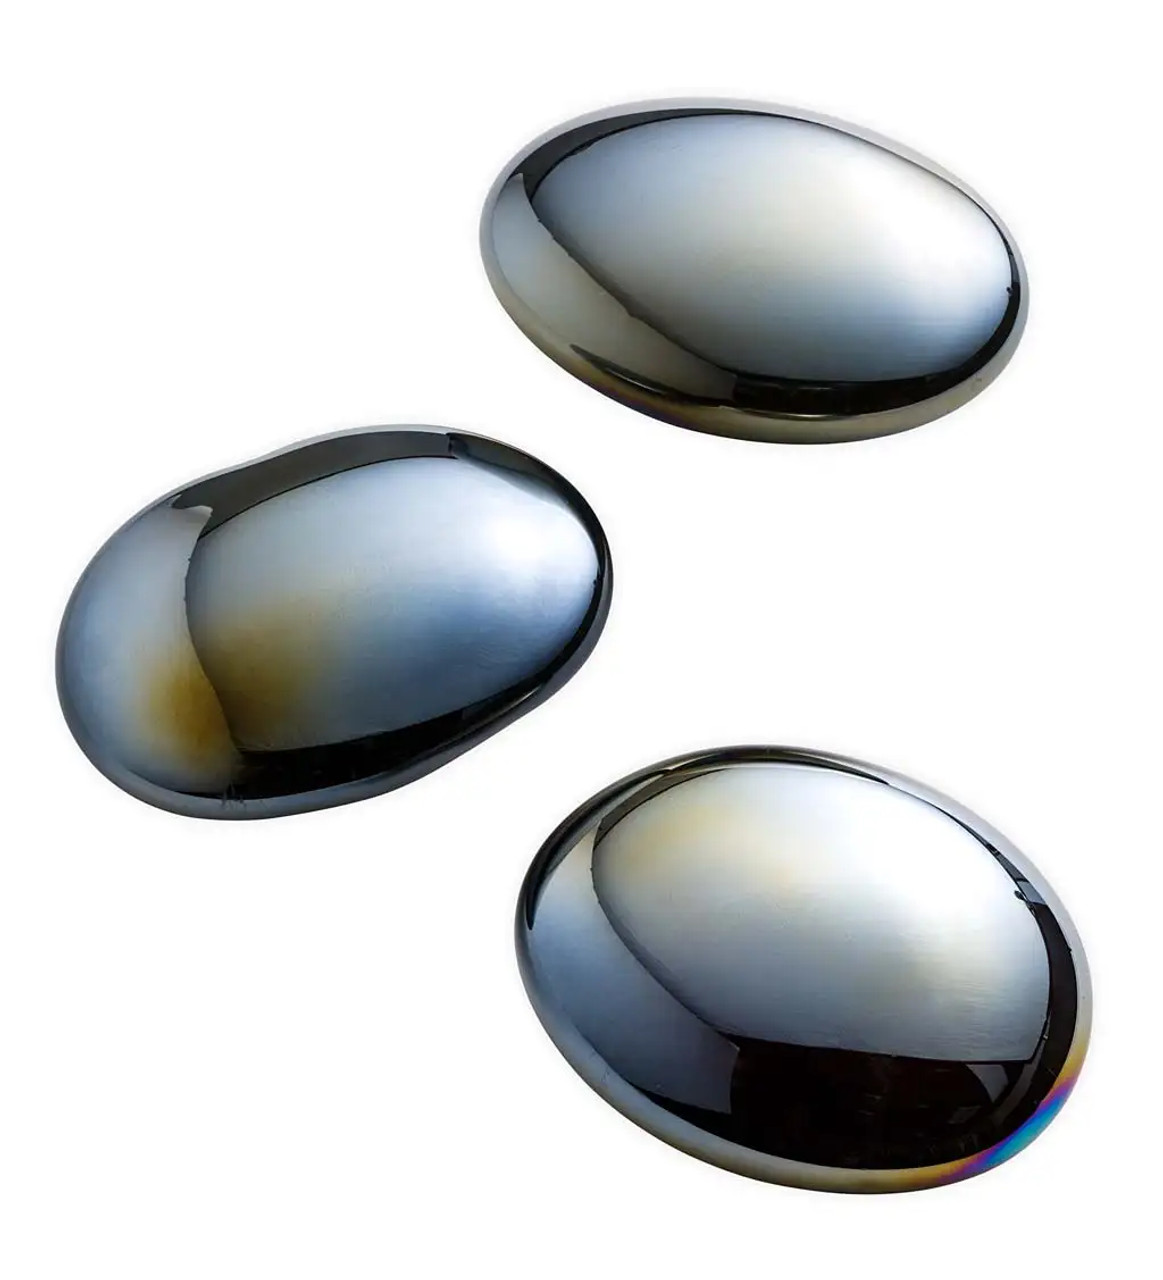 Organic Shaped Iridescent Glass Stones, Set of 3 (v4948)